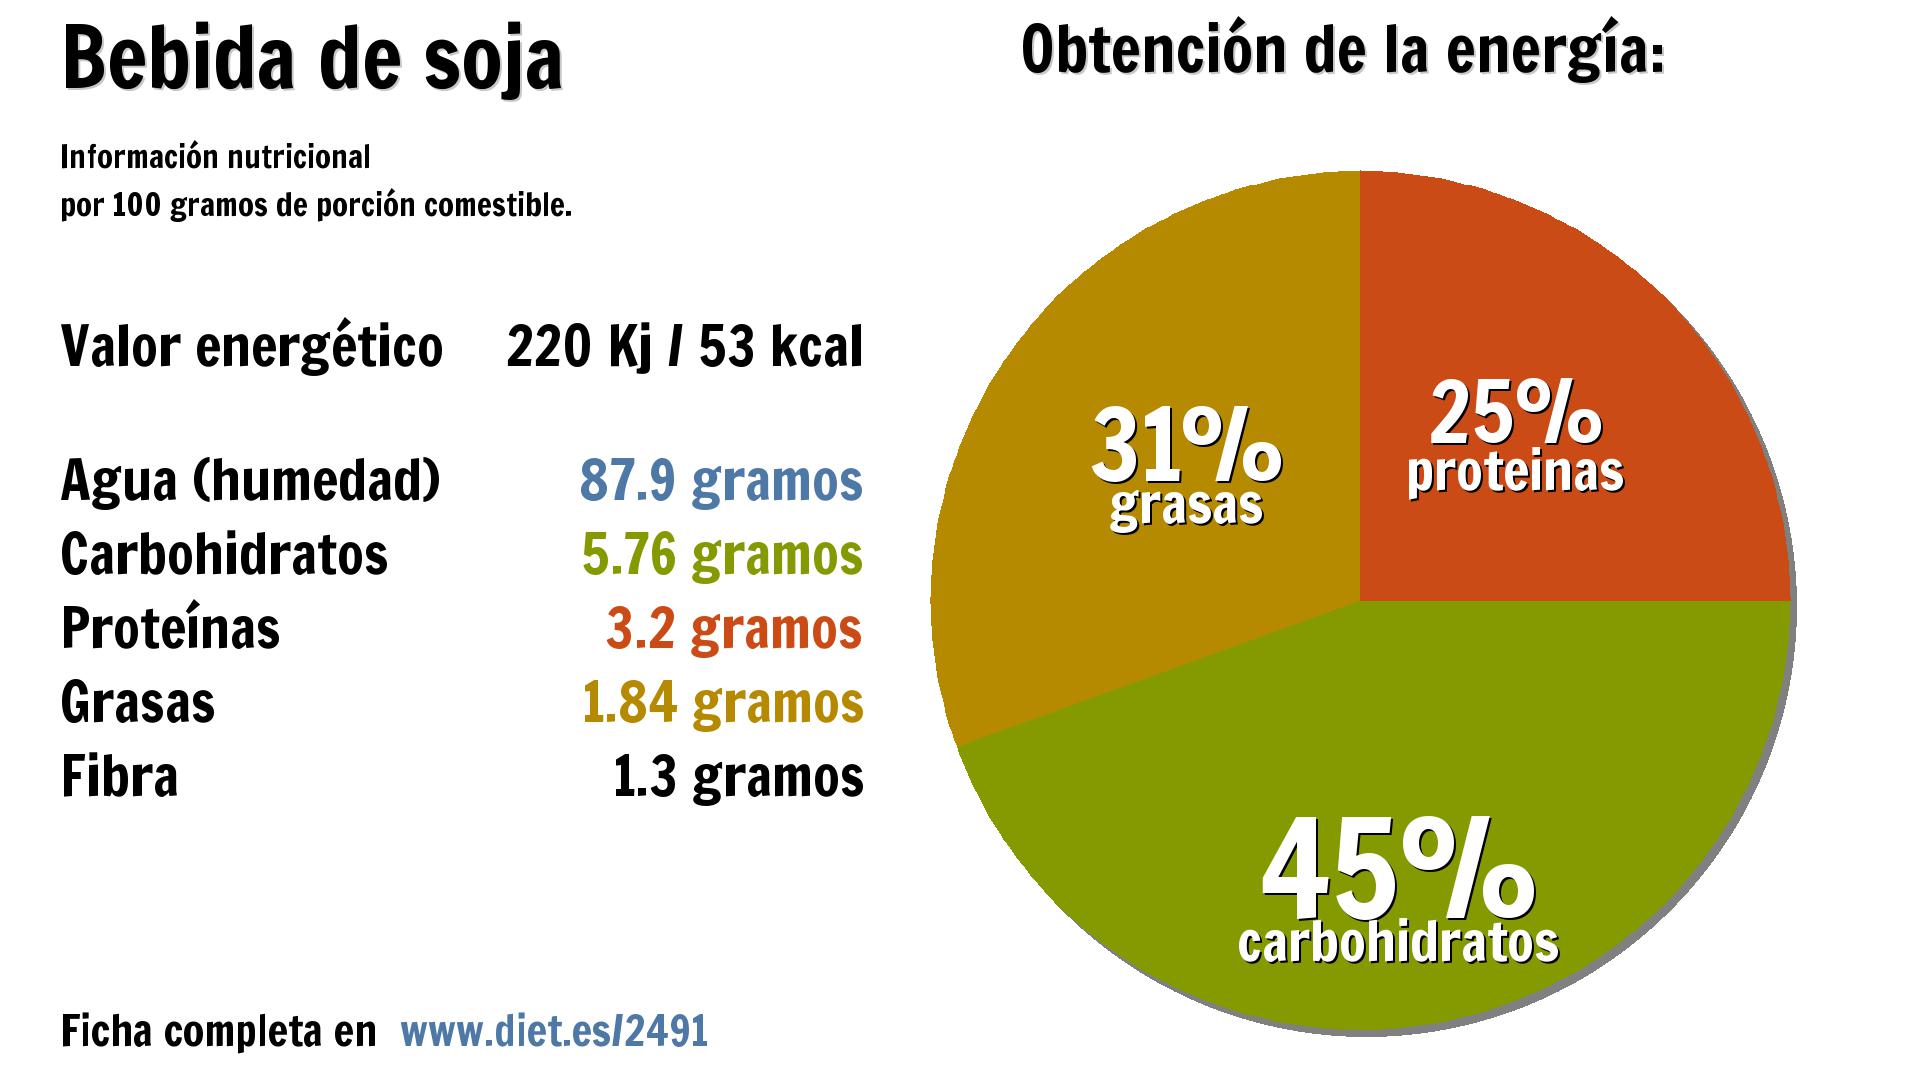 Bebida de soja: energía 220 Kj, agua 88 g., carbohidratos 6 g., proteínas 3 g., grasas 2 g. y fibra 1 g.